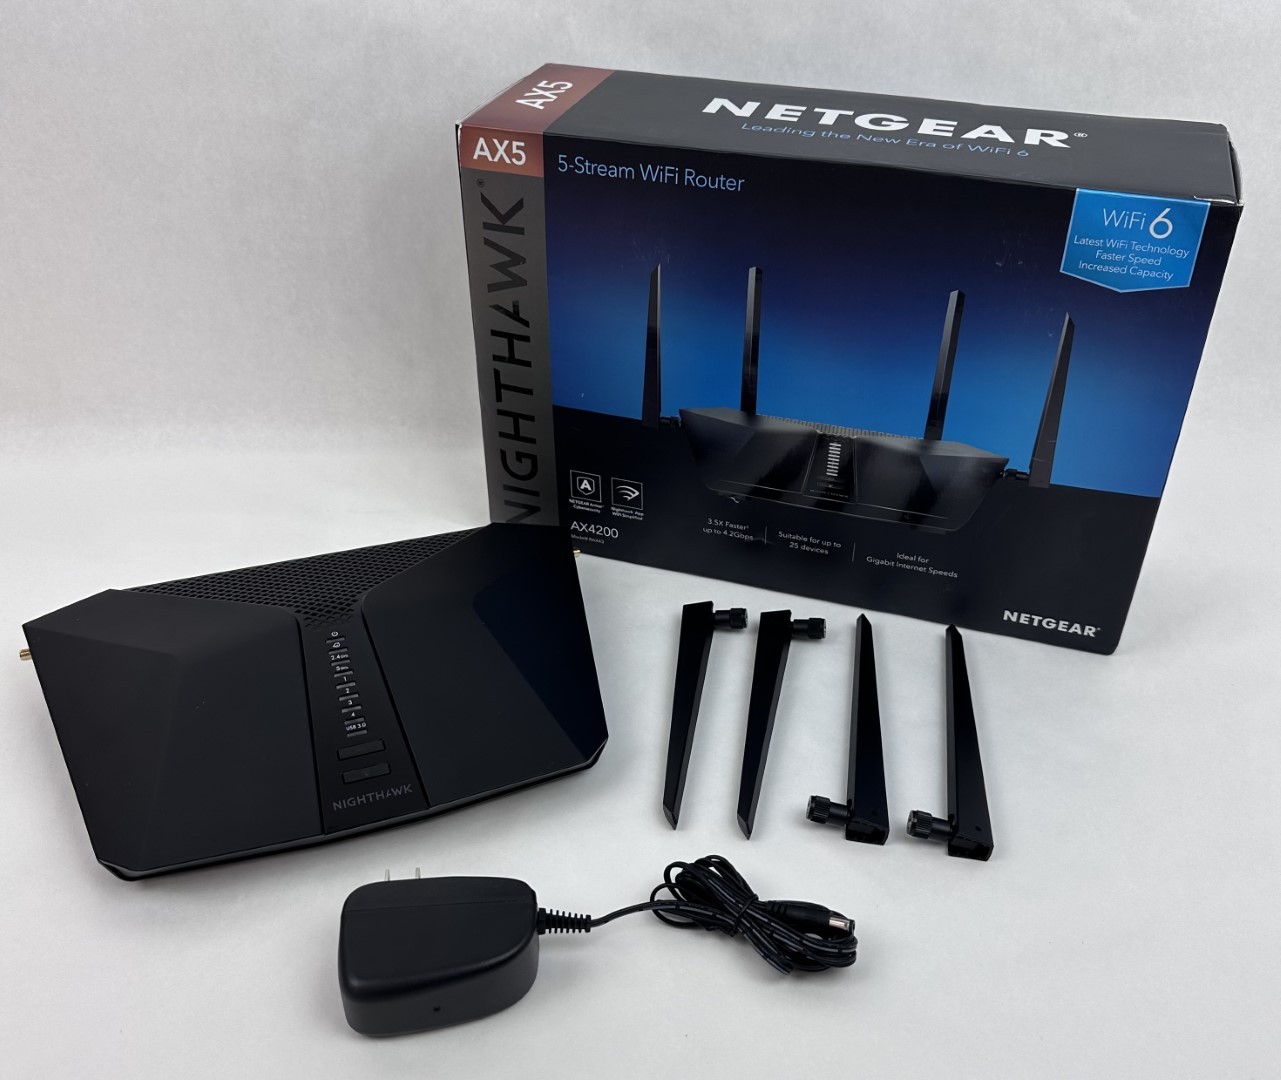 NETGEAR Nighthawk AX4200 5-Stream WiFi Router RAX43-100NAS - Black